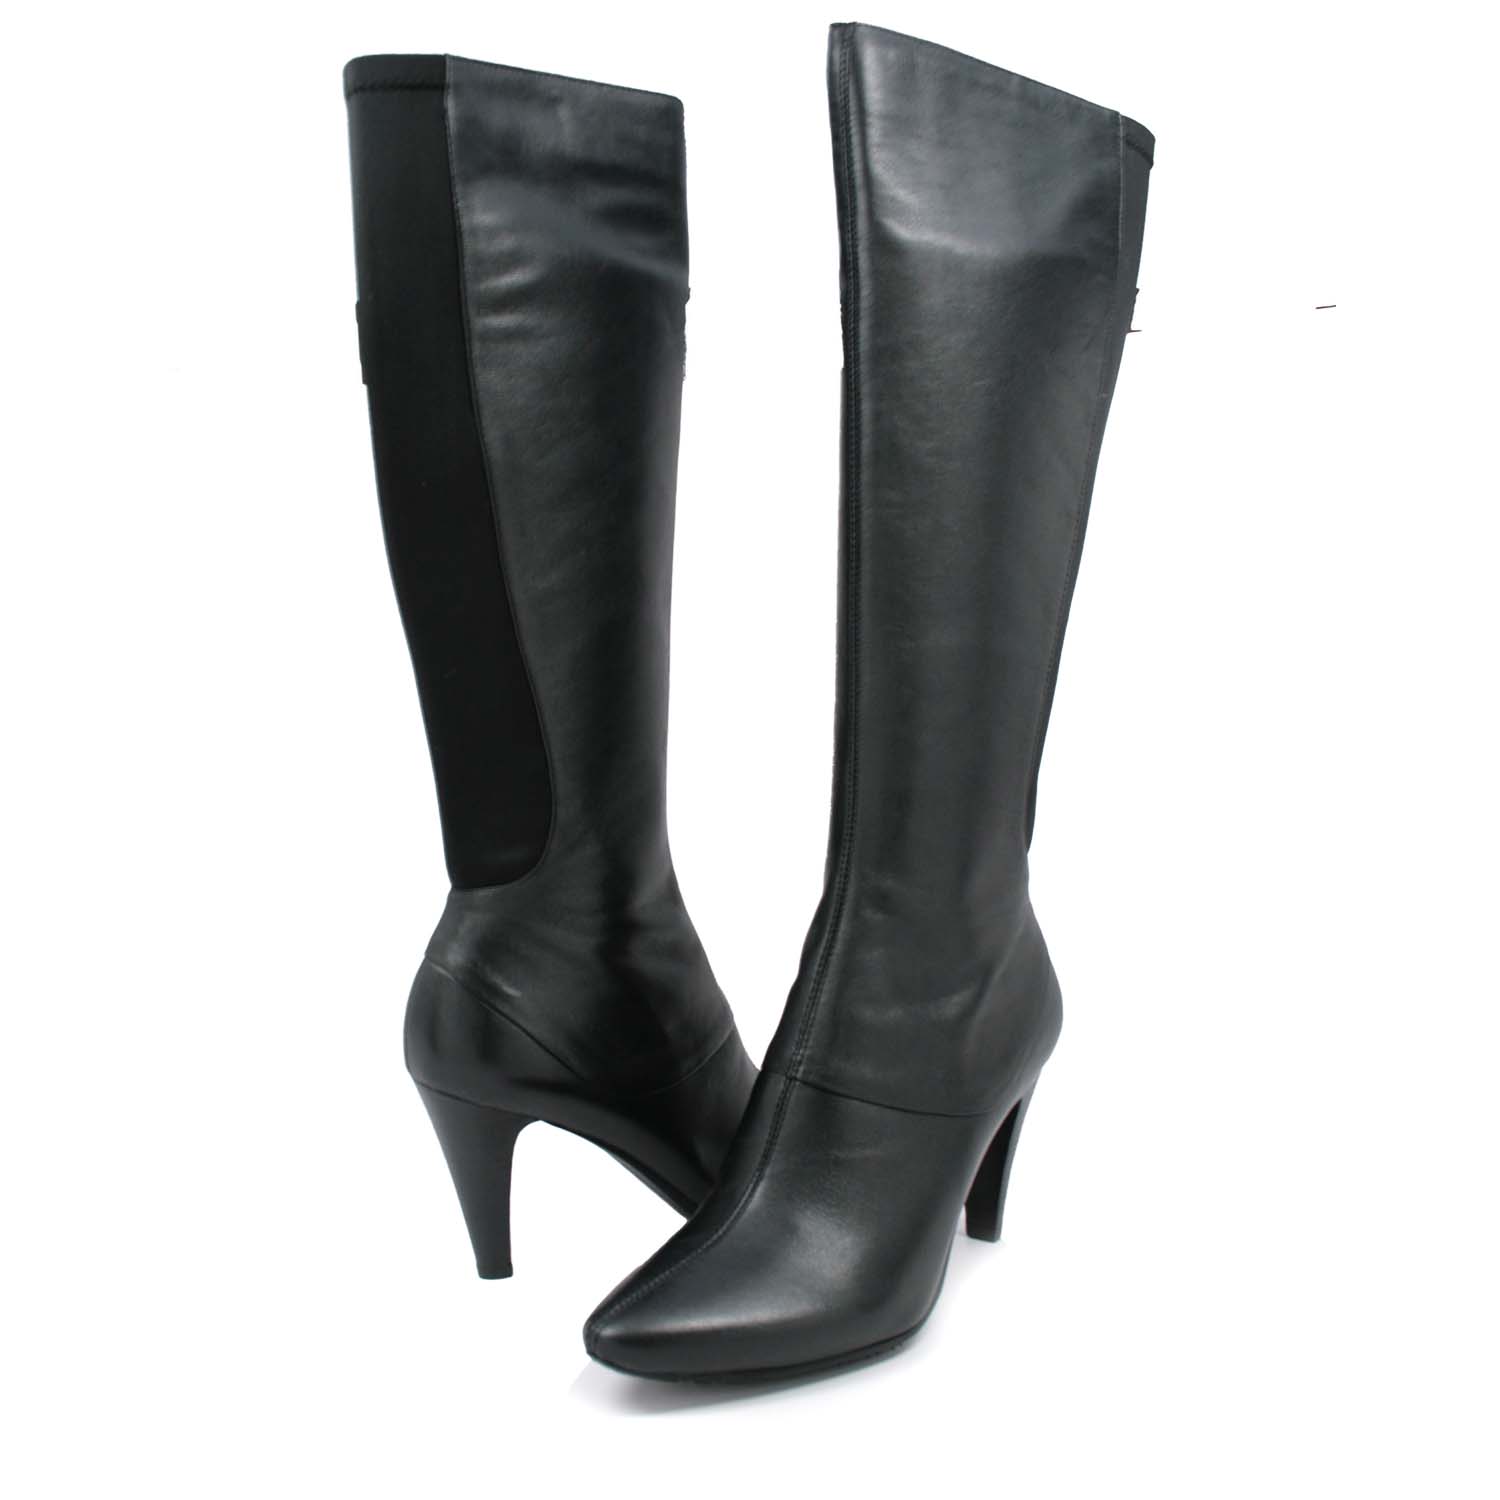 womens tall boots narrow calf